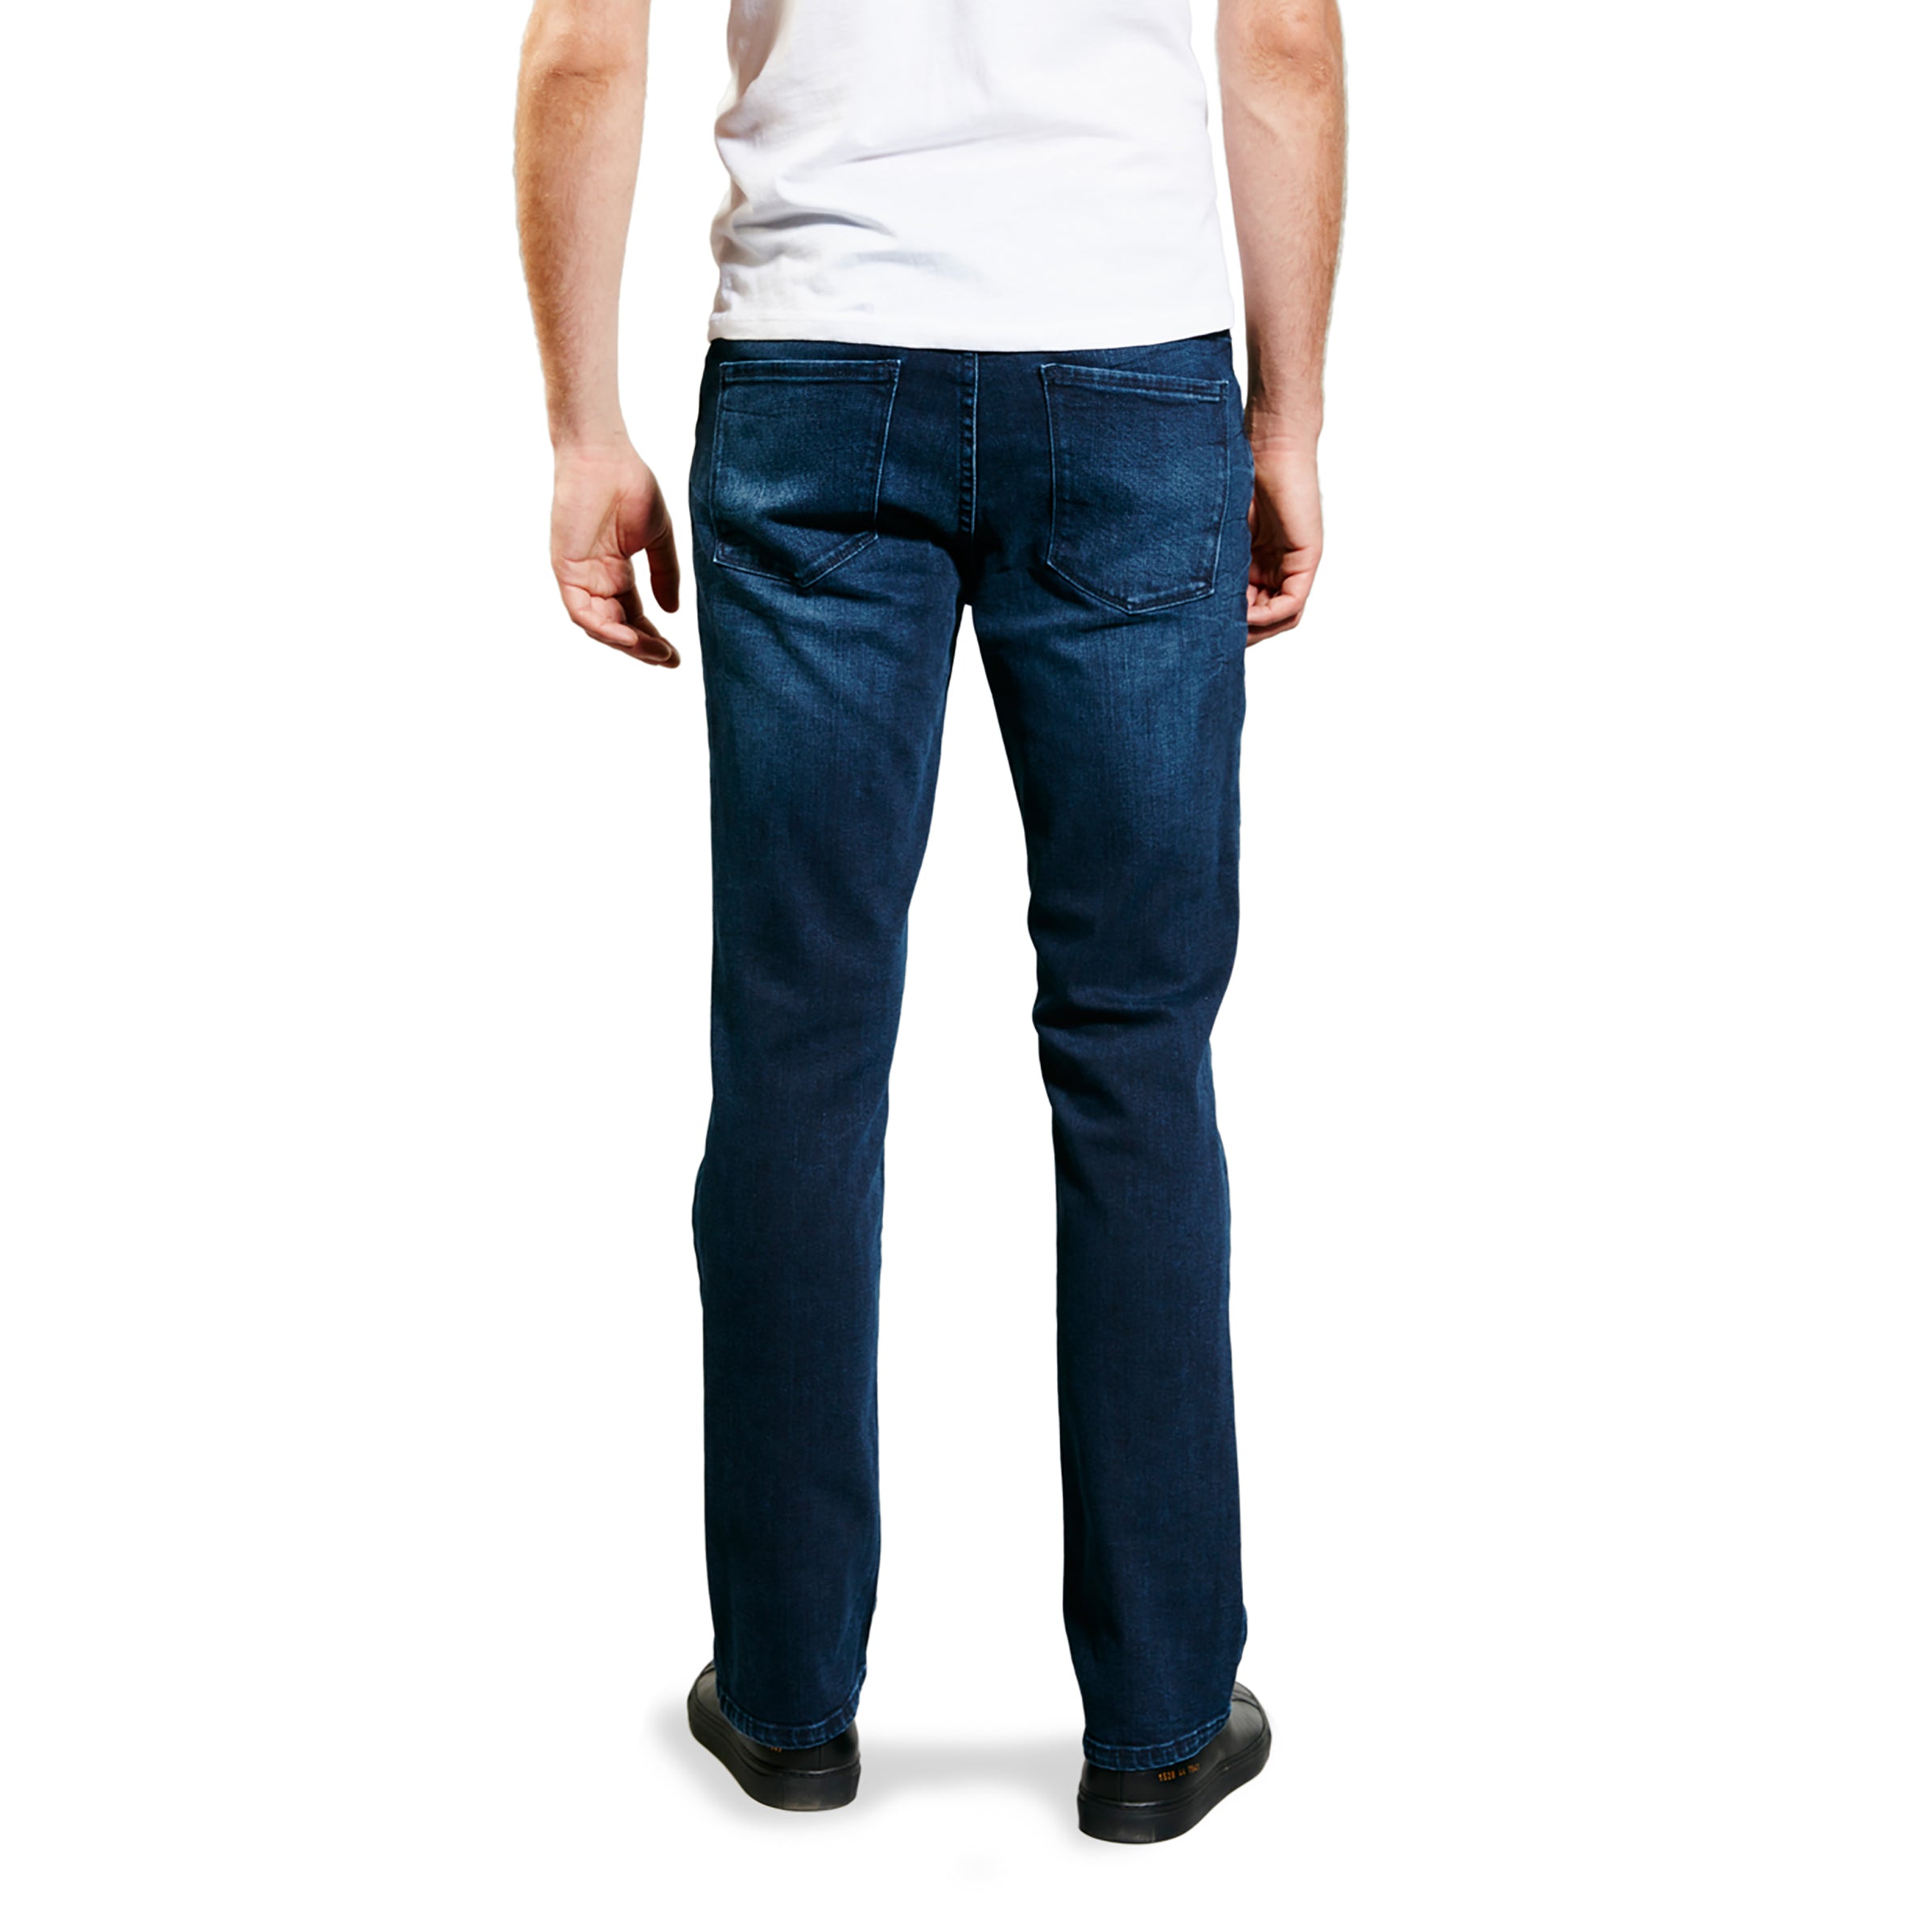 Men wearing Medium/Dark Blue Straight Staple Jeans